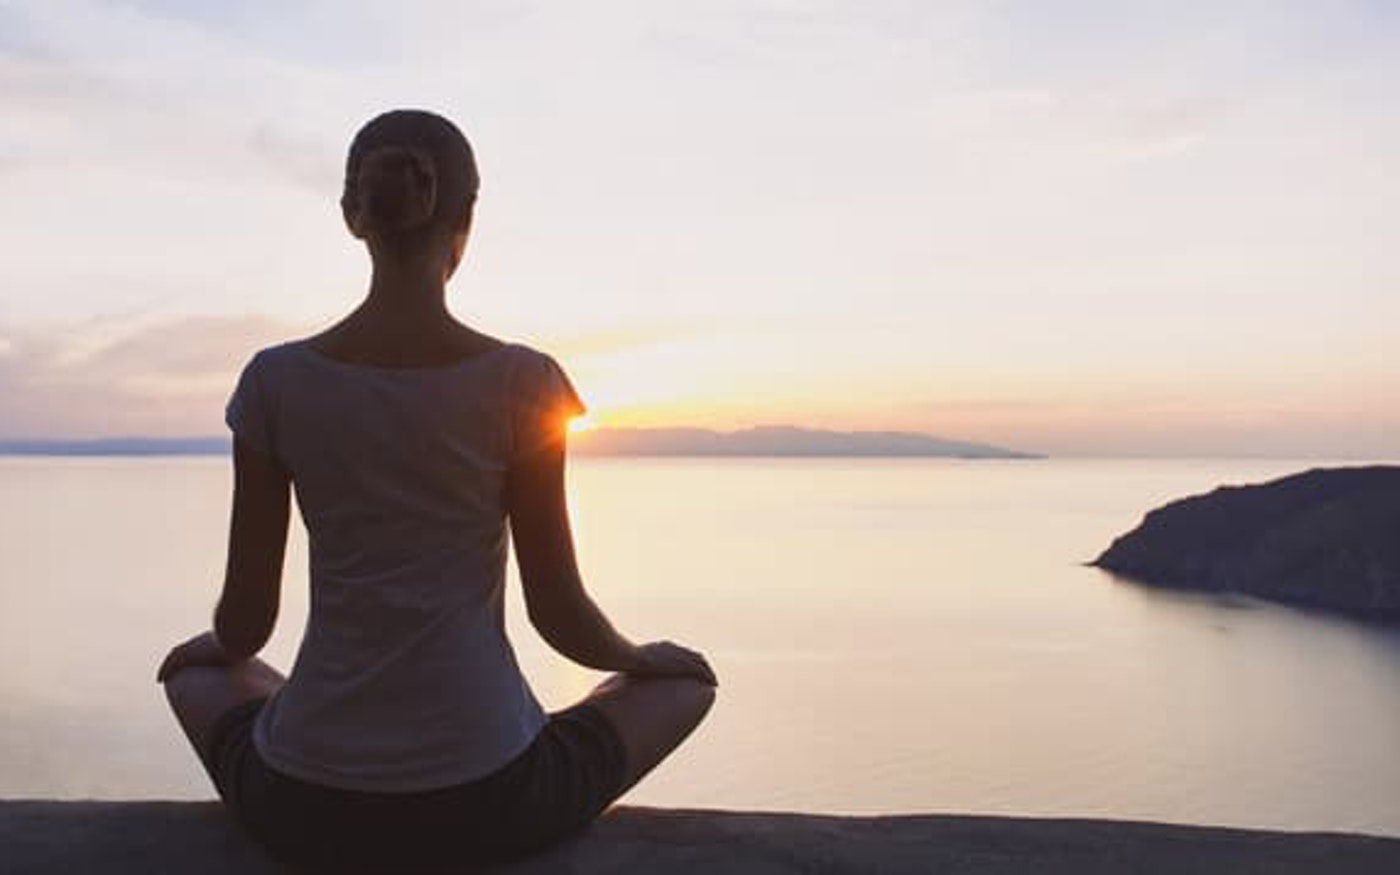 Meditation boosts creativity and makes you an optimist: Study